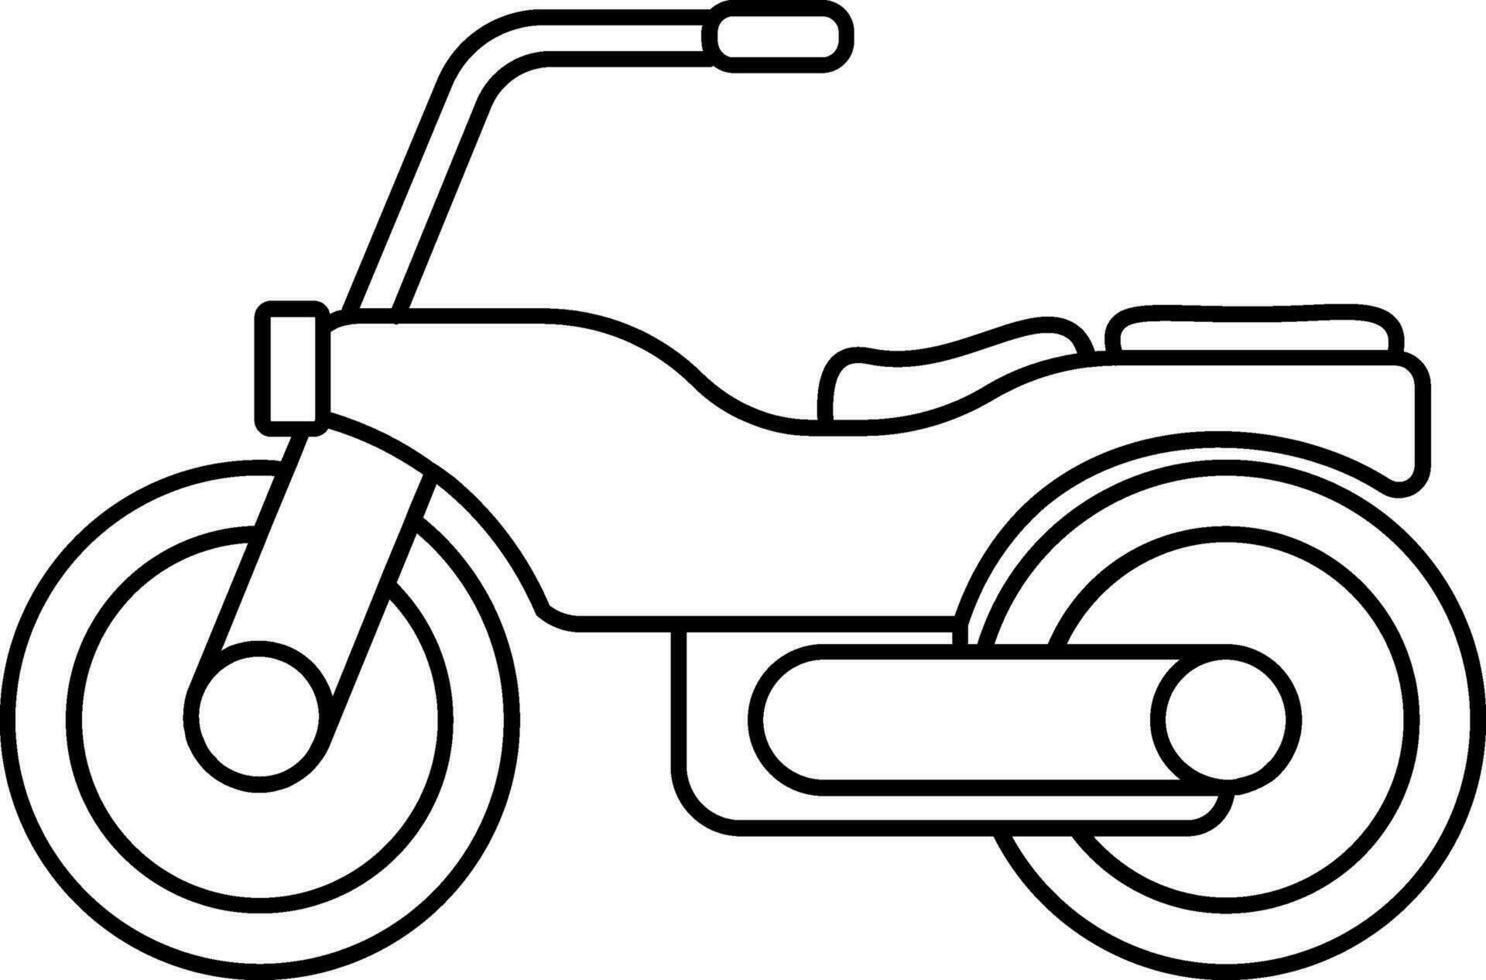 Flat Style Motorbike Icon In Black Line Art. vector